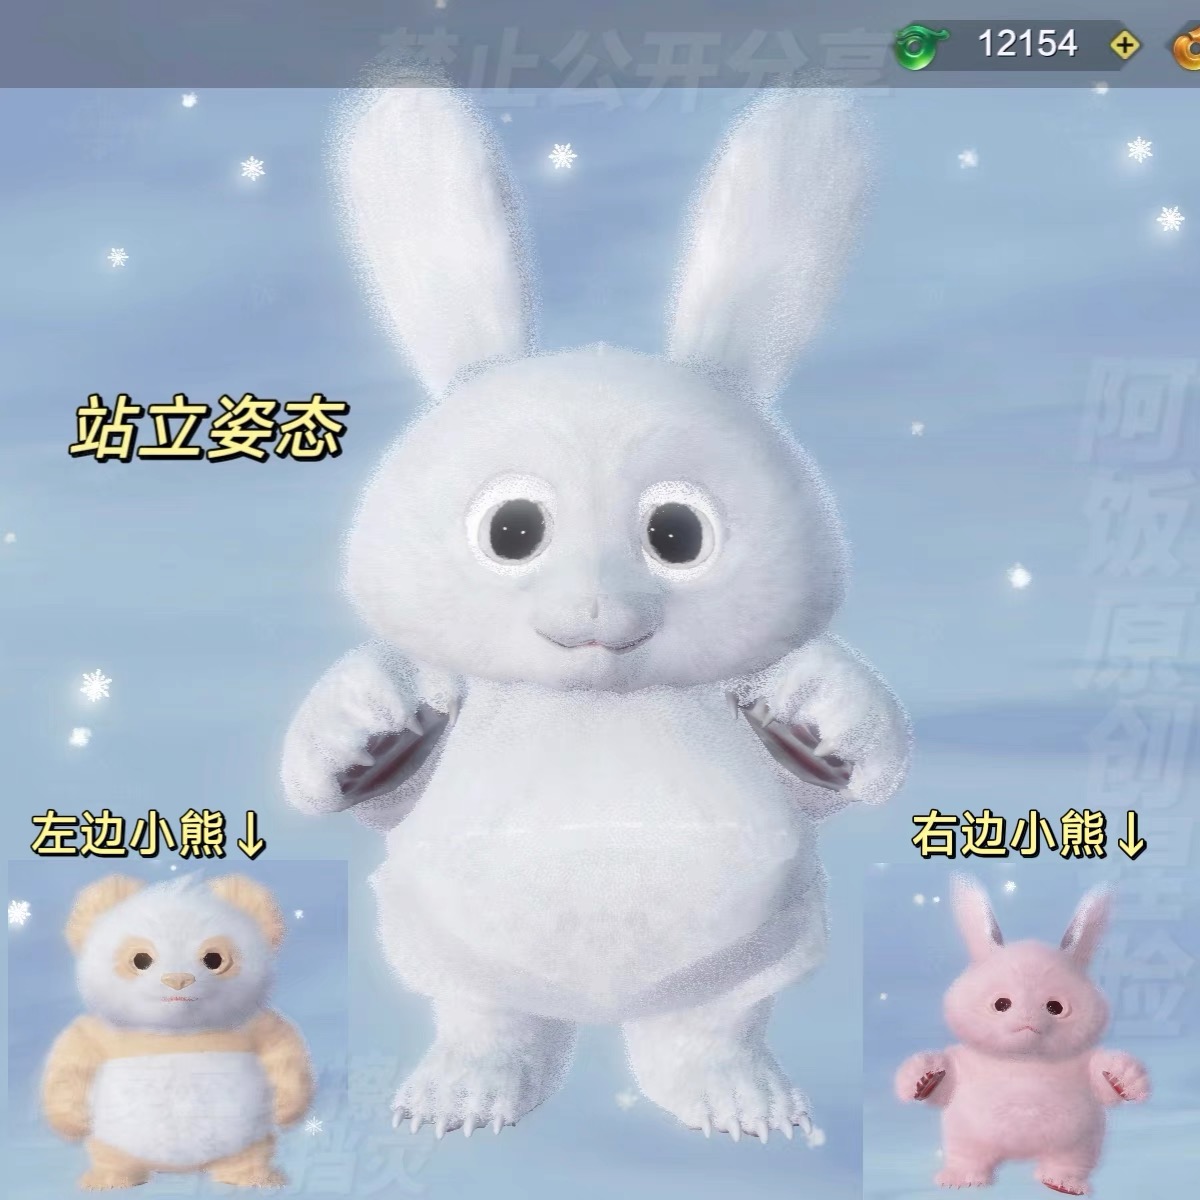 J5/妄想山海熊猫食铁兽小兔子捏脸数据/缩小版/虚拟数据概不退换